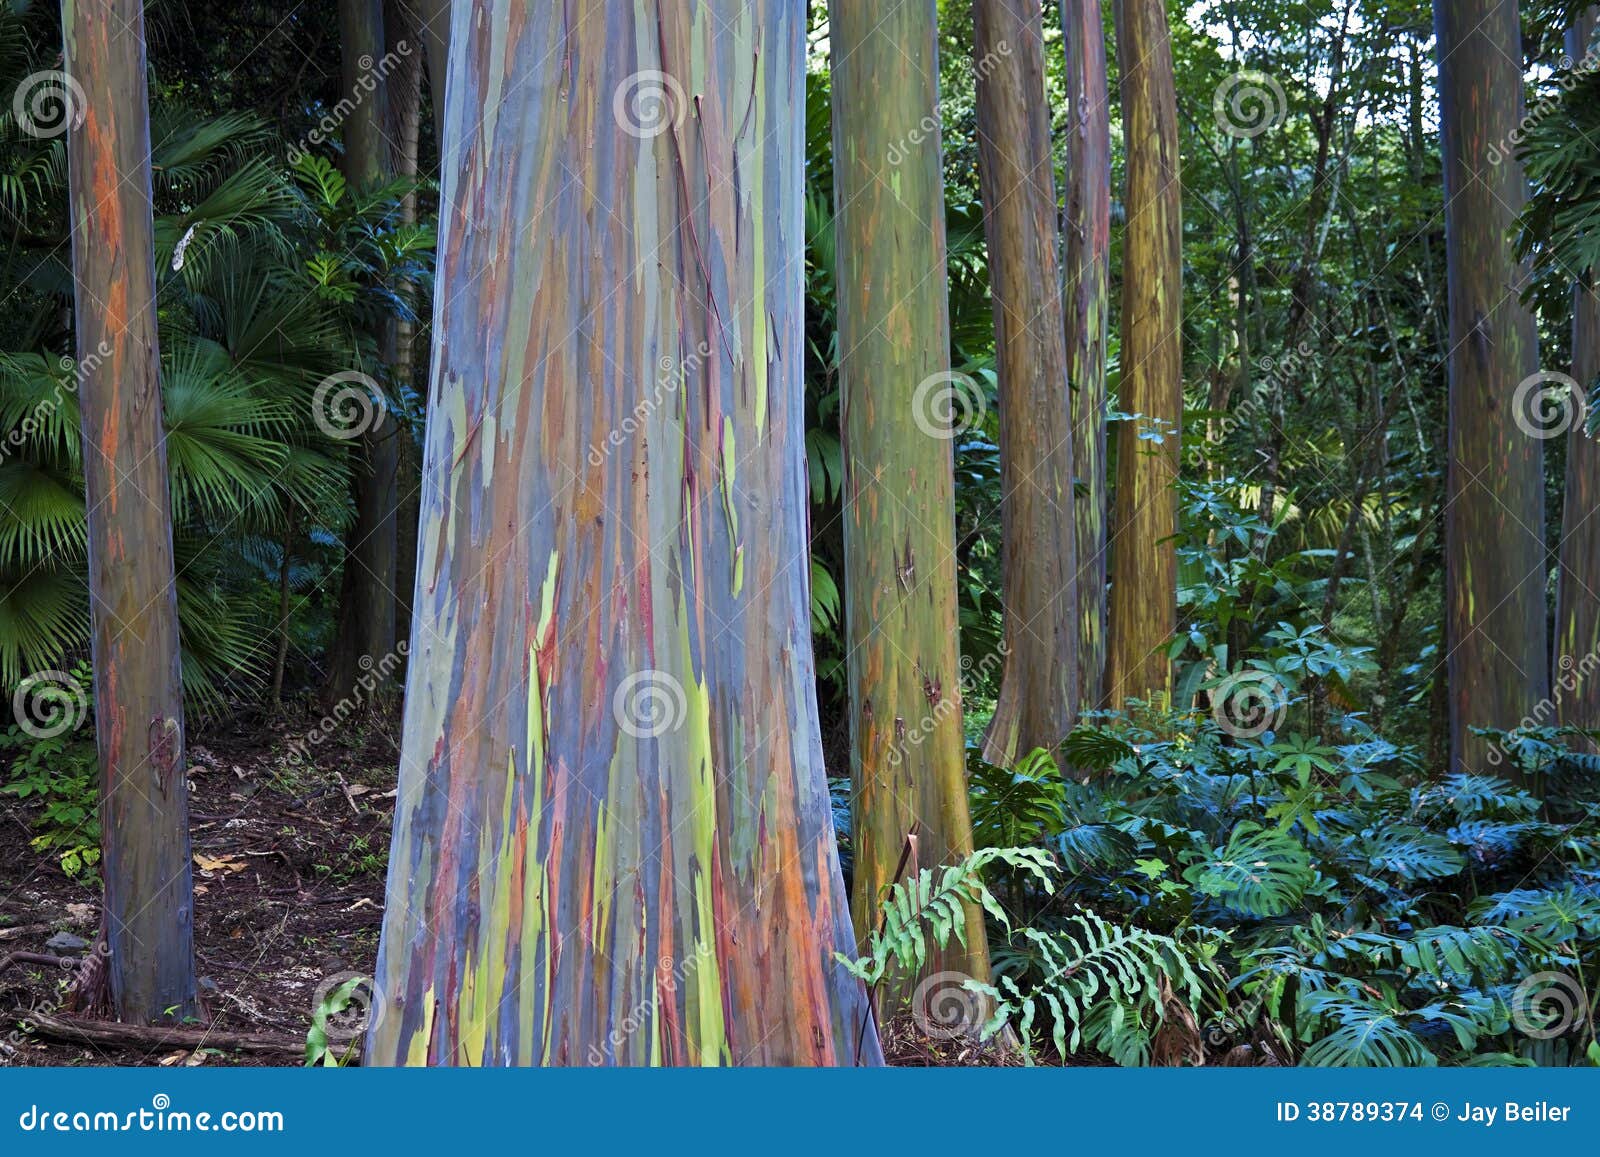 amazing rainbow eucalyptus